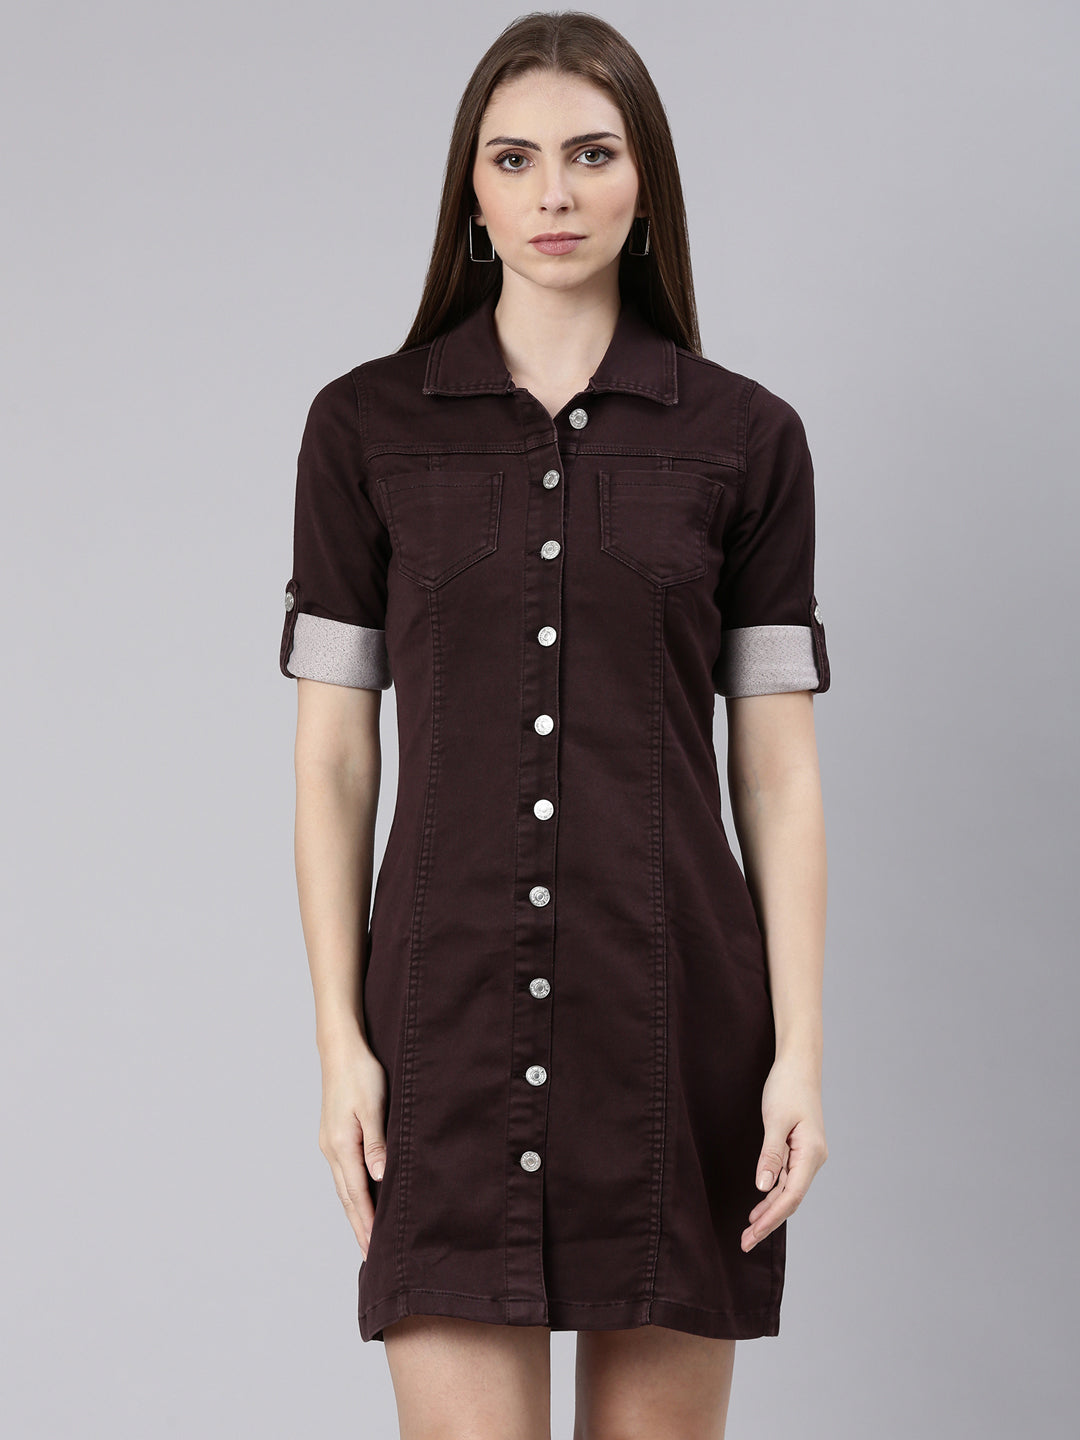 Women Violet Solid Shirt Dress